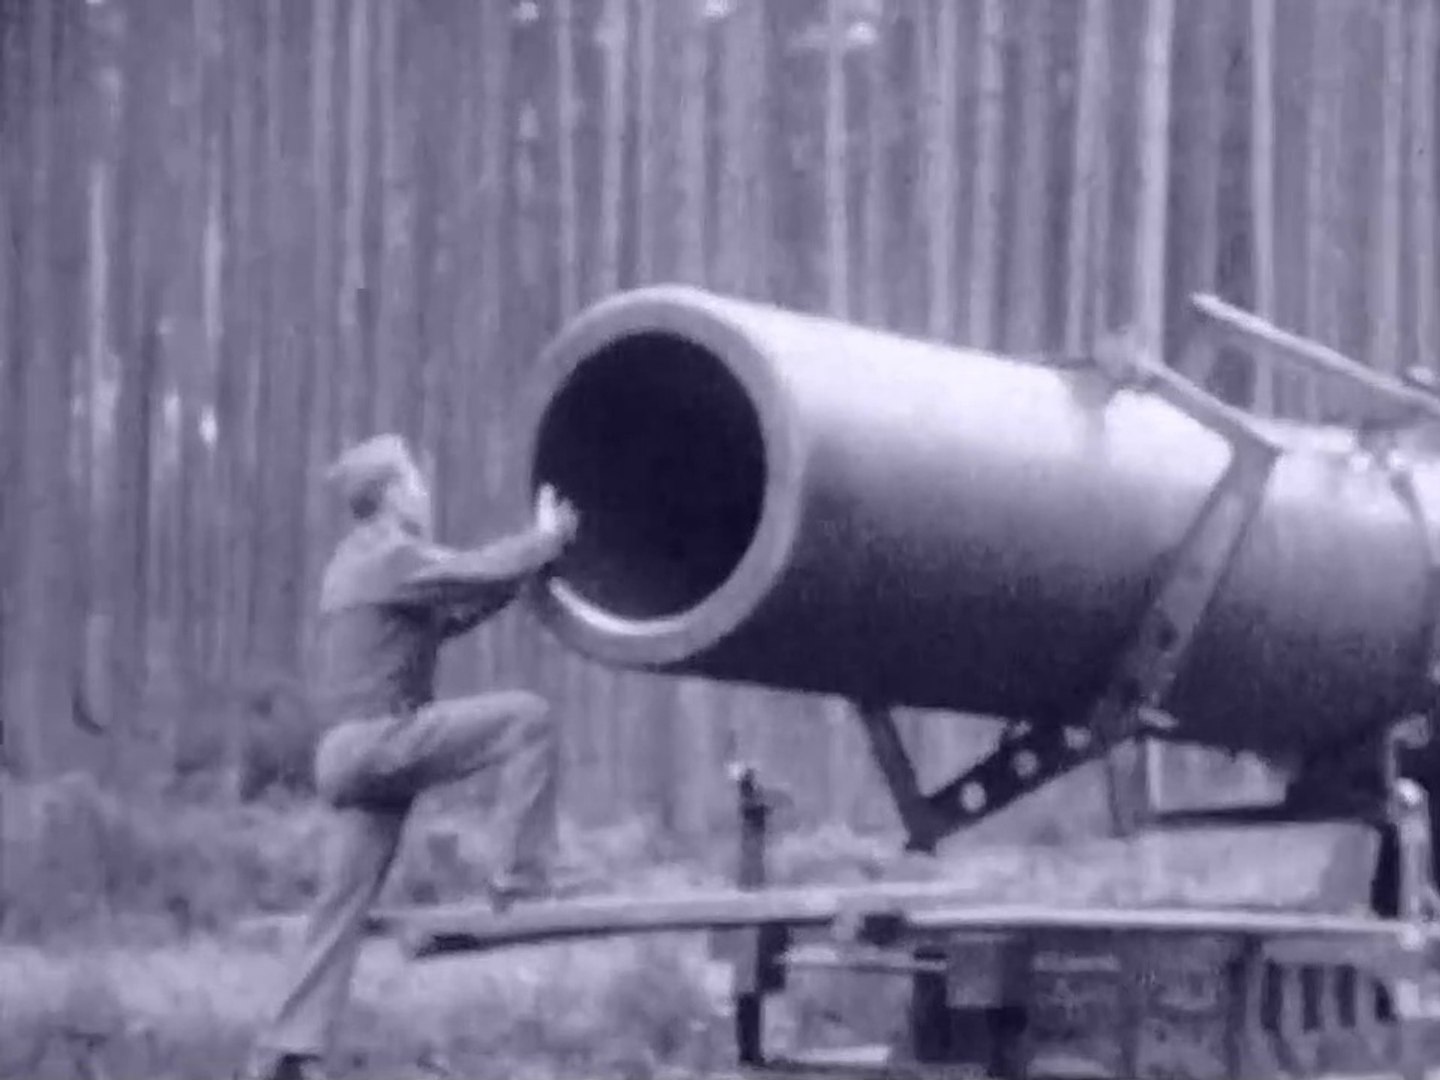 The absolutely massive Earth-shattering German railway gun - Schwerer Gustav  